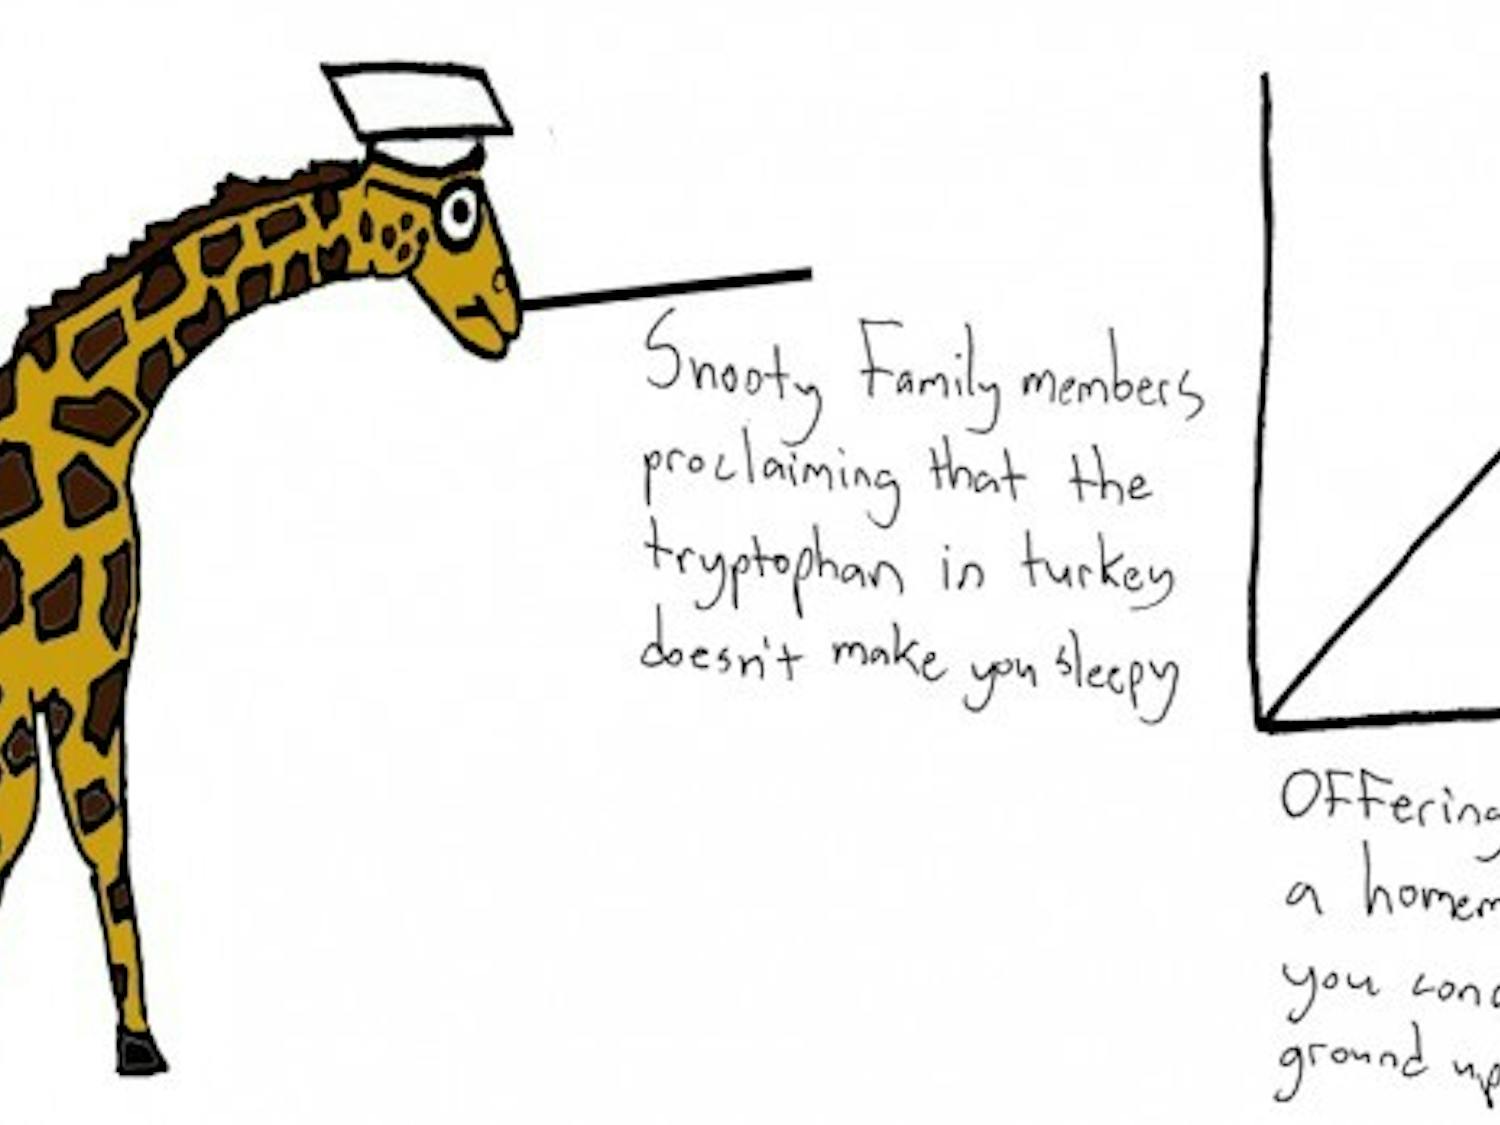 11/24/2009 - The Graph Giraffe